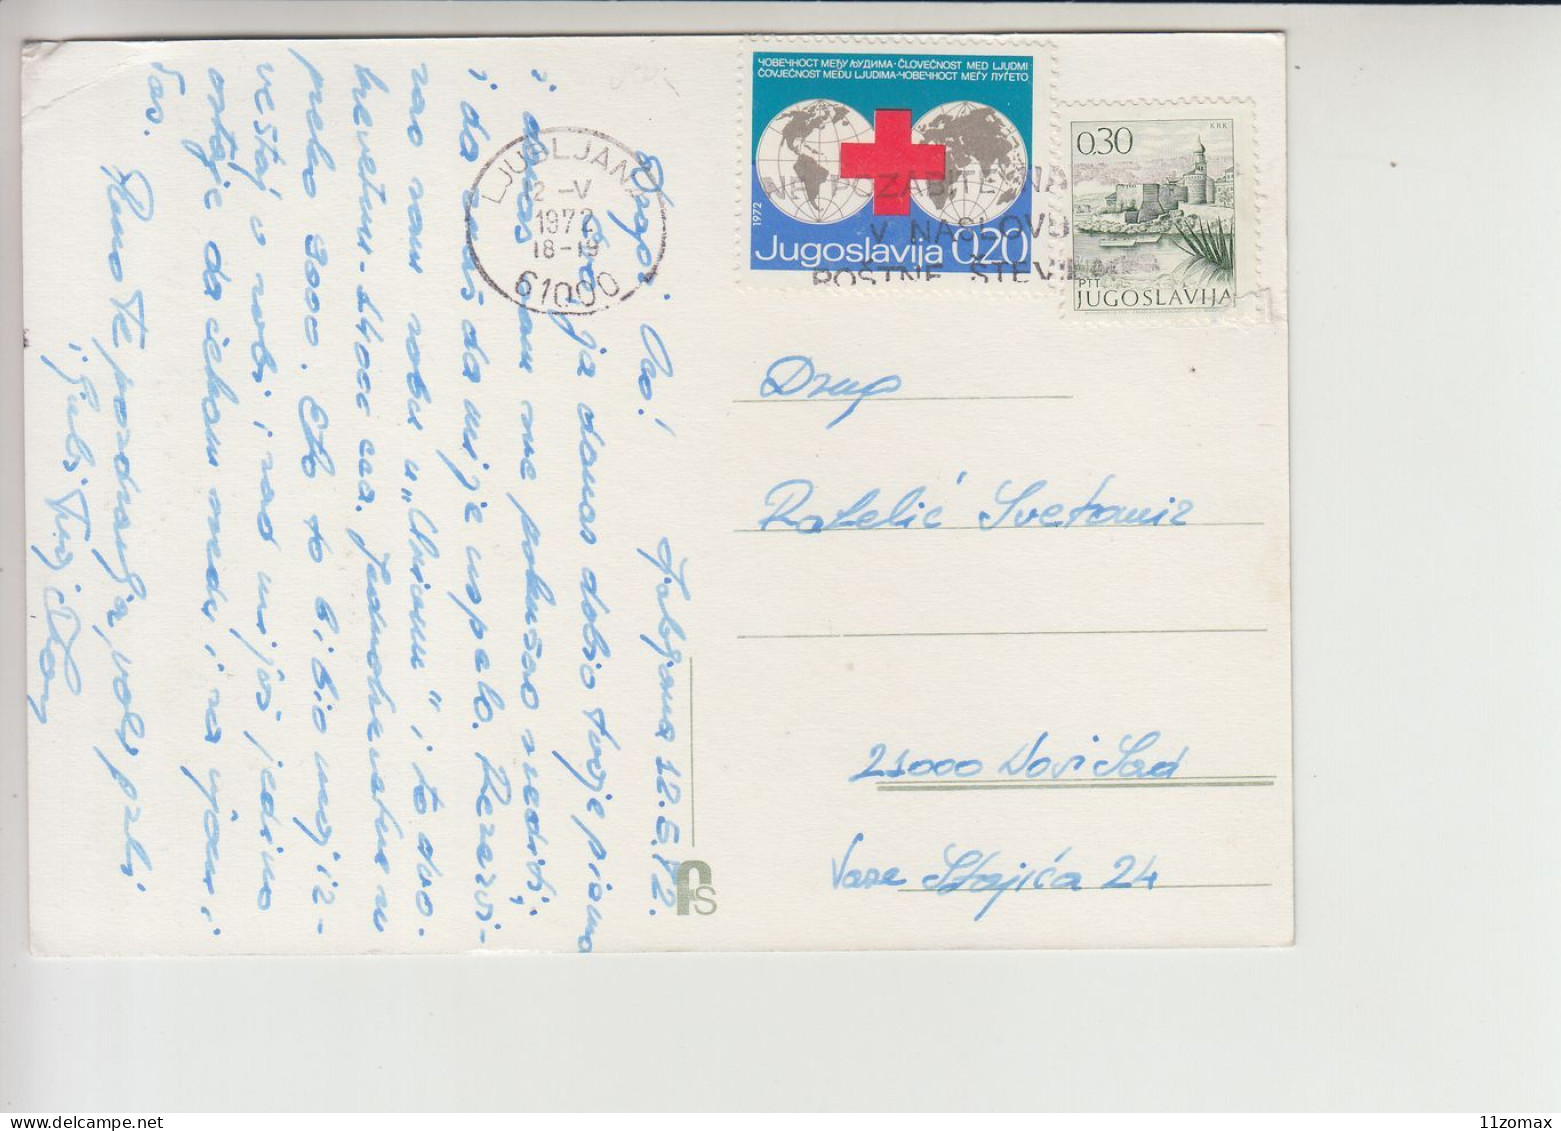 Ljubljana Cancelation Red Cross Surcharge 1972 (sl012) Slovenia - Cartas & Documentos